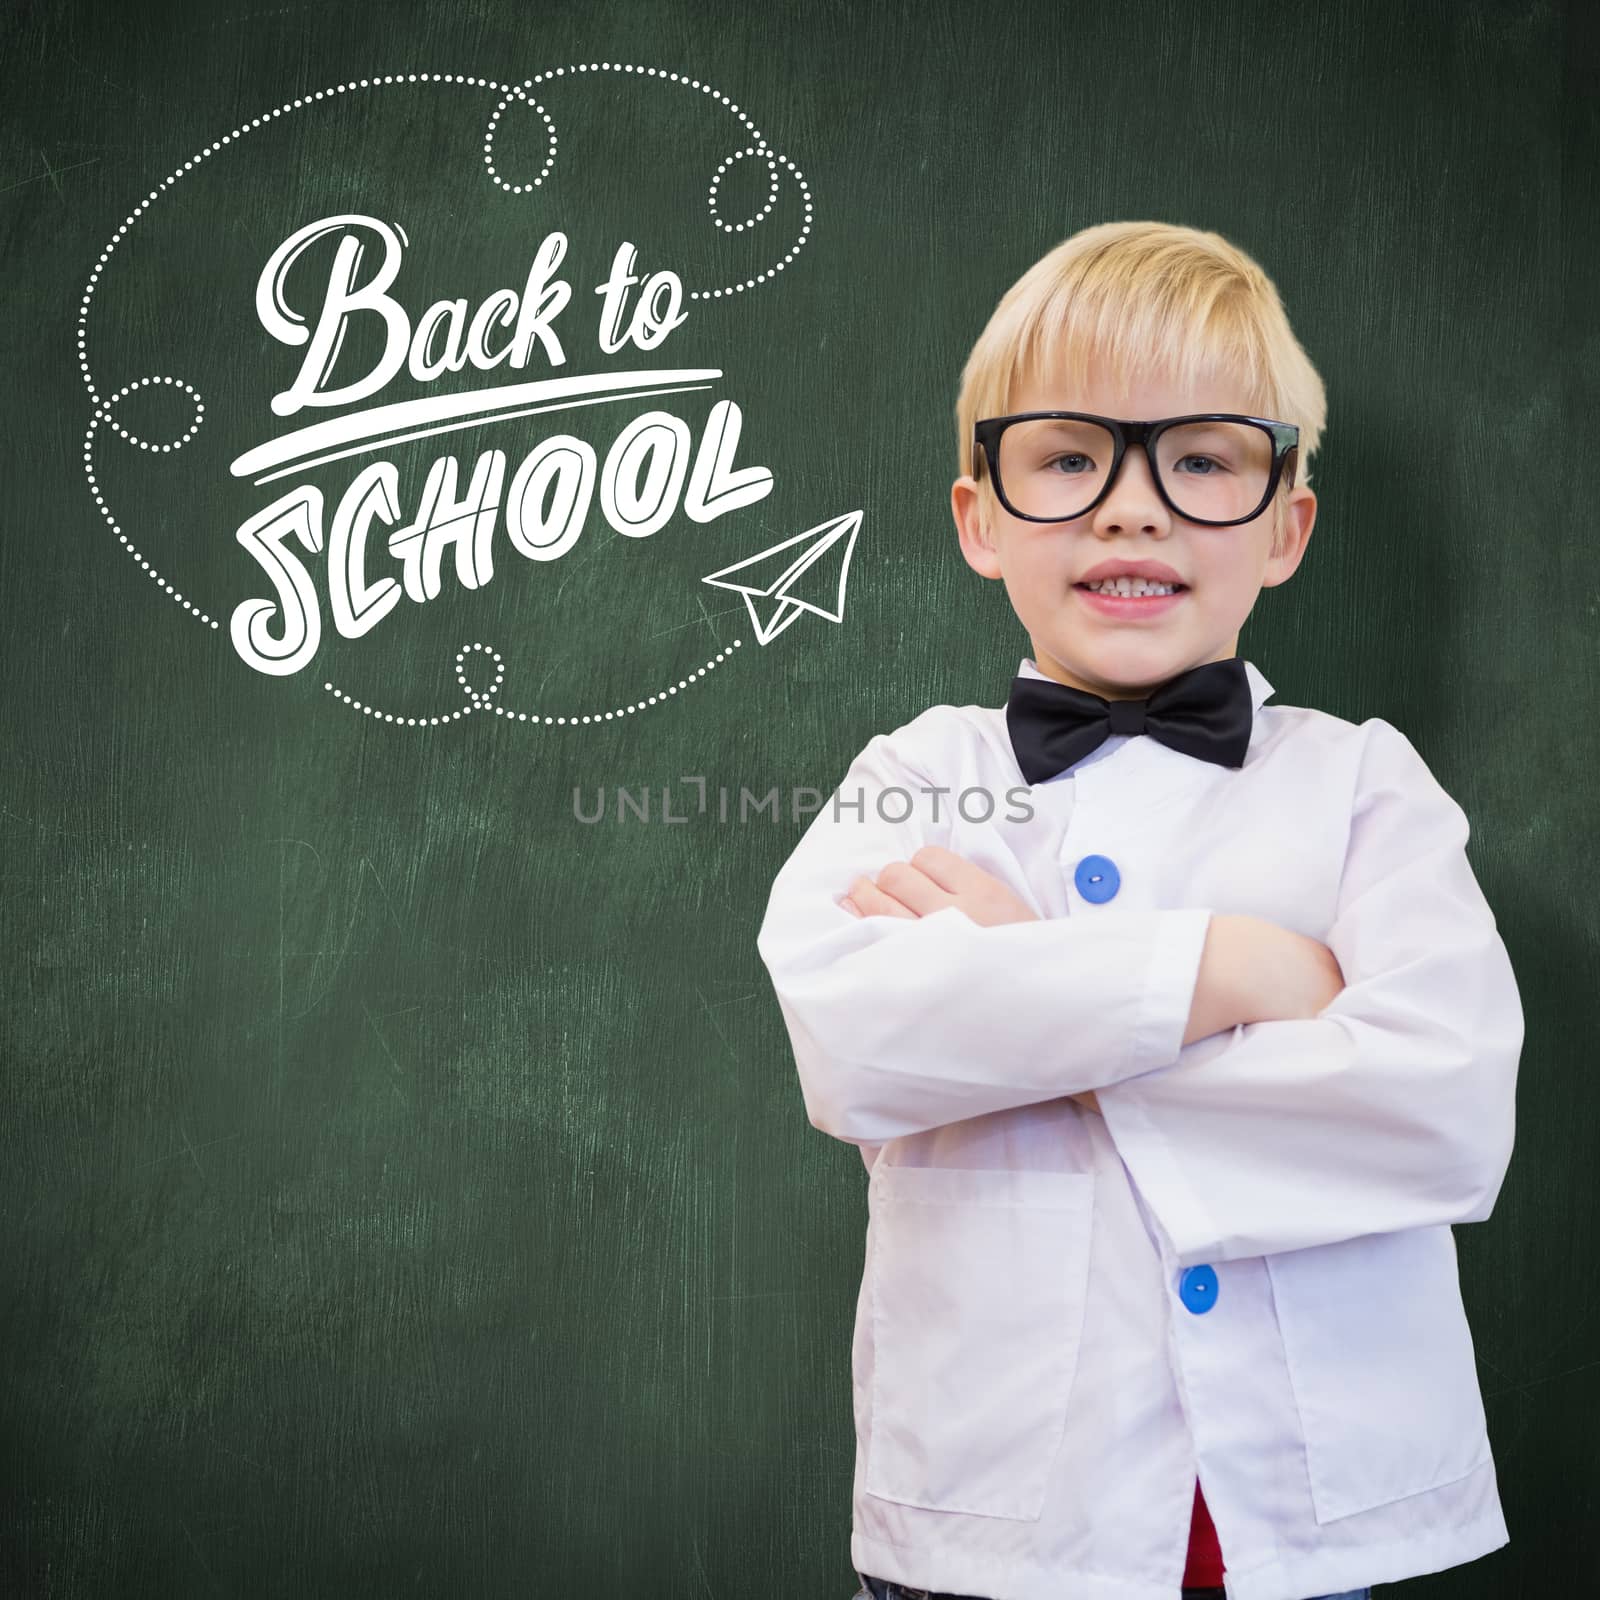 Cute pupil dressed up as teacher against green chalkboard